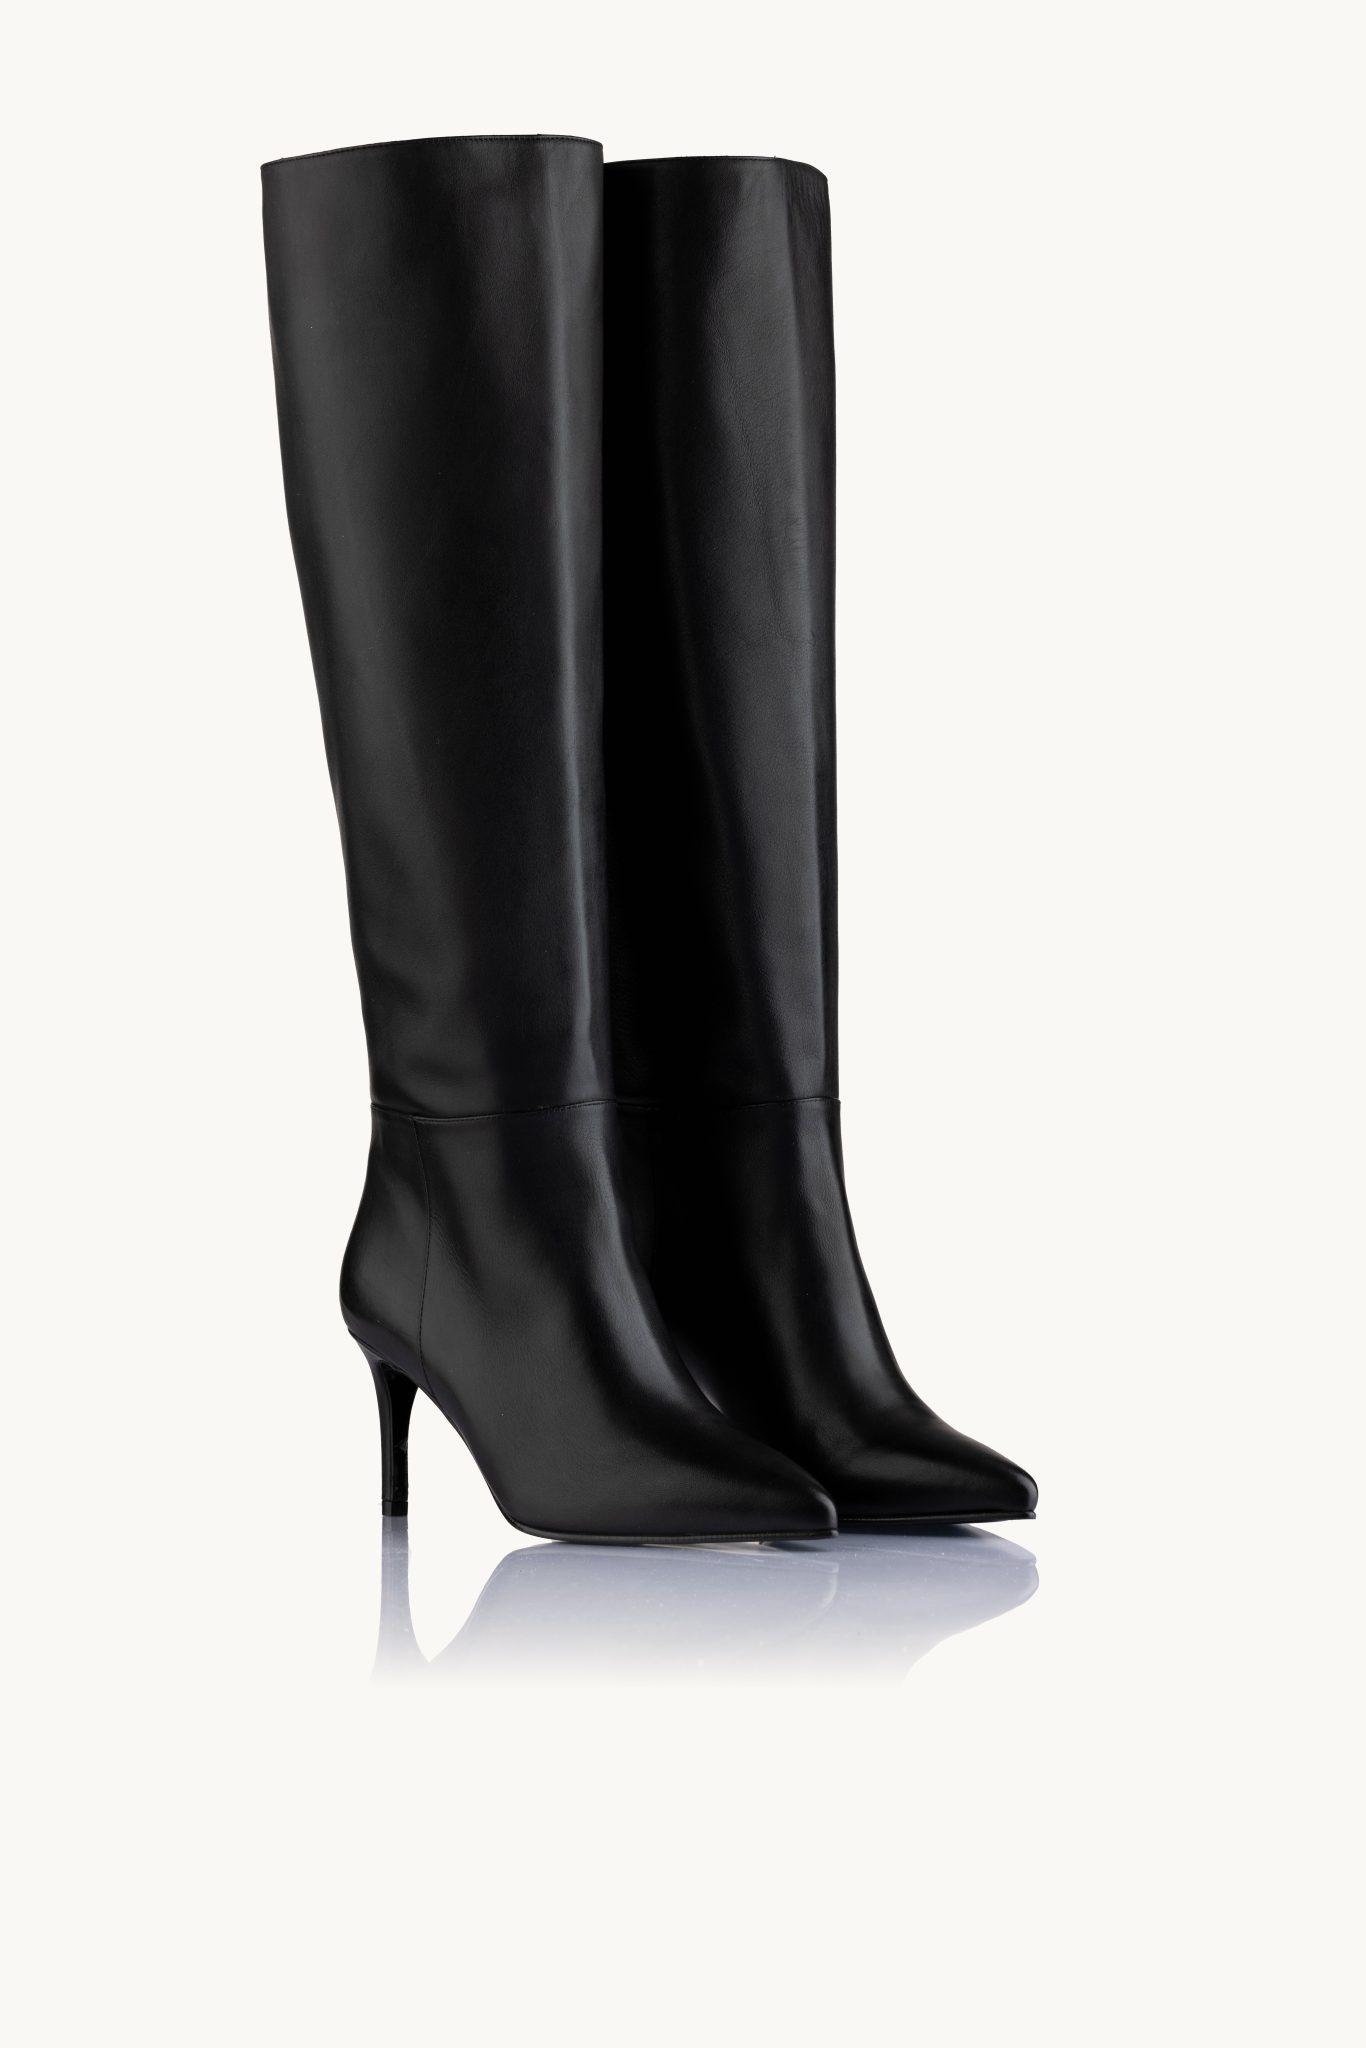 Selected image for NAKA Ženske čizme na štiklu Black Tranquility crne